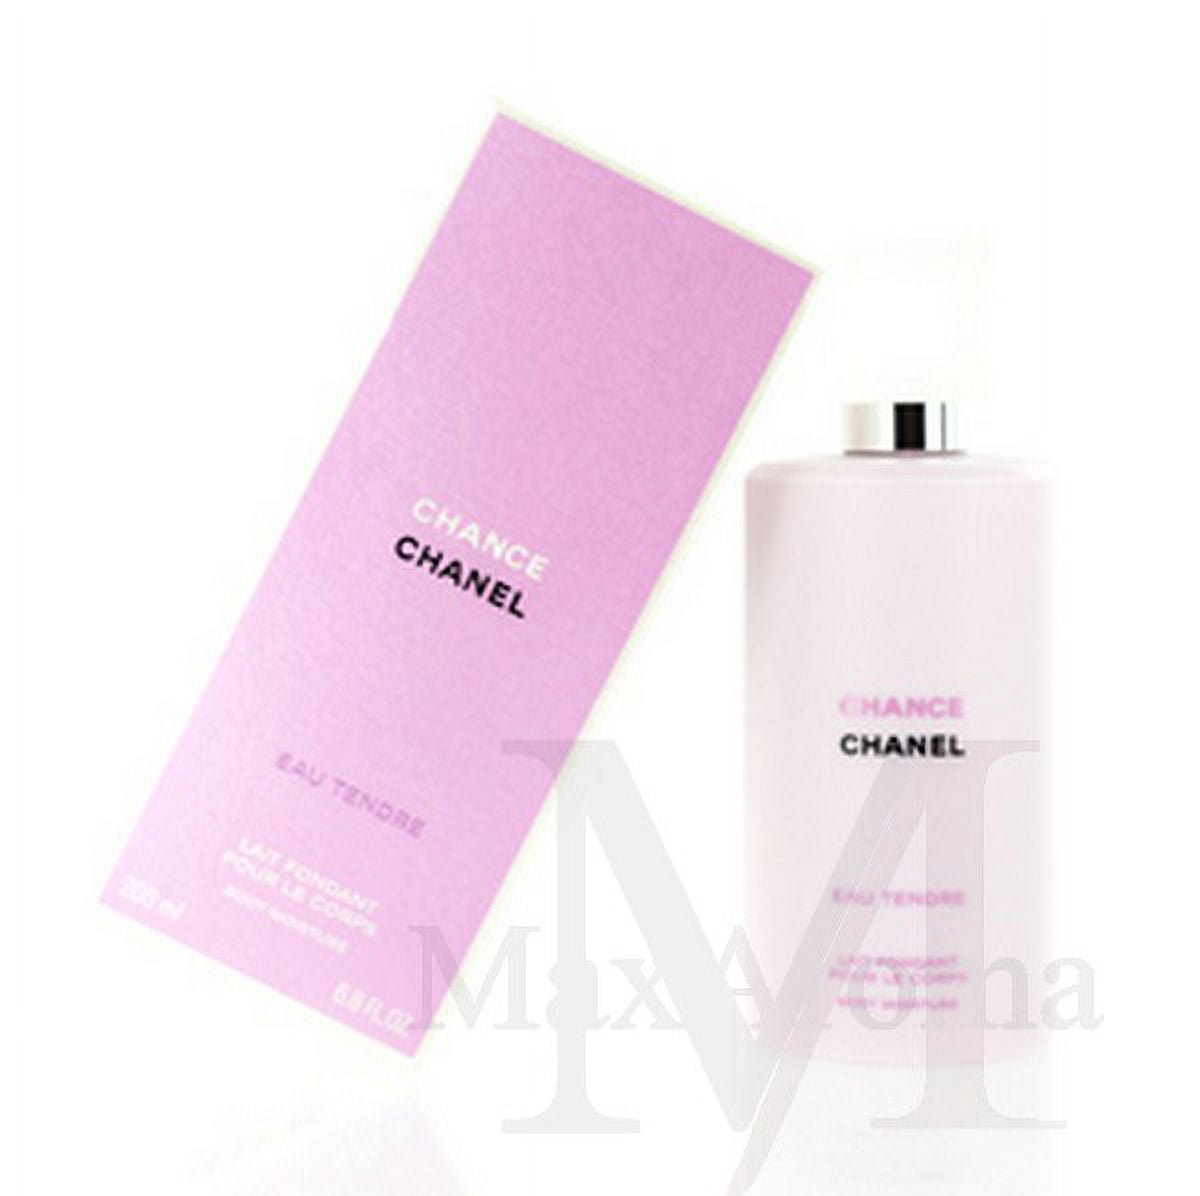 Chanel Chance Eau Tendre Body Moisturizer